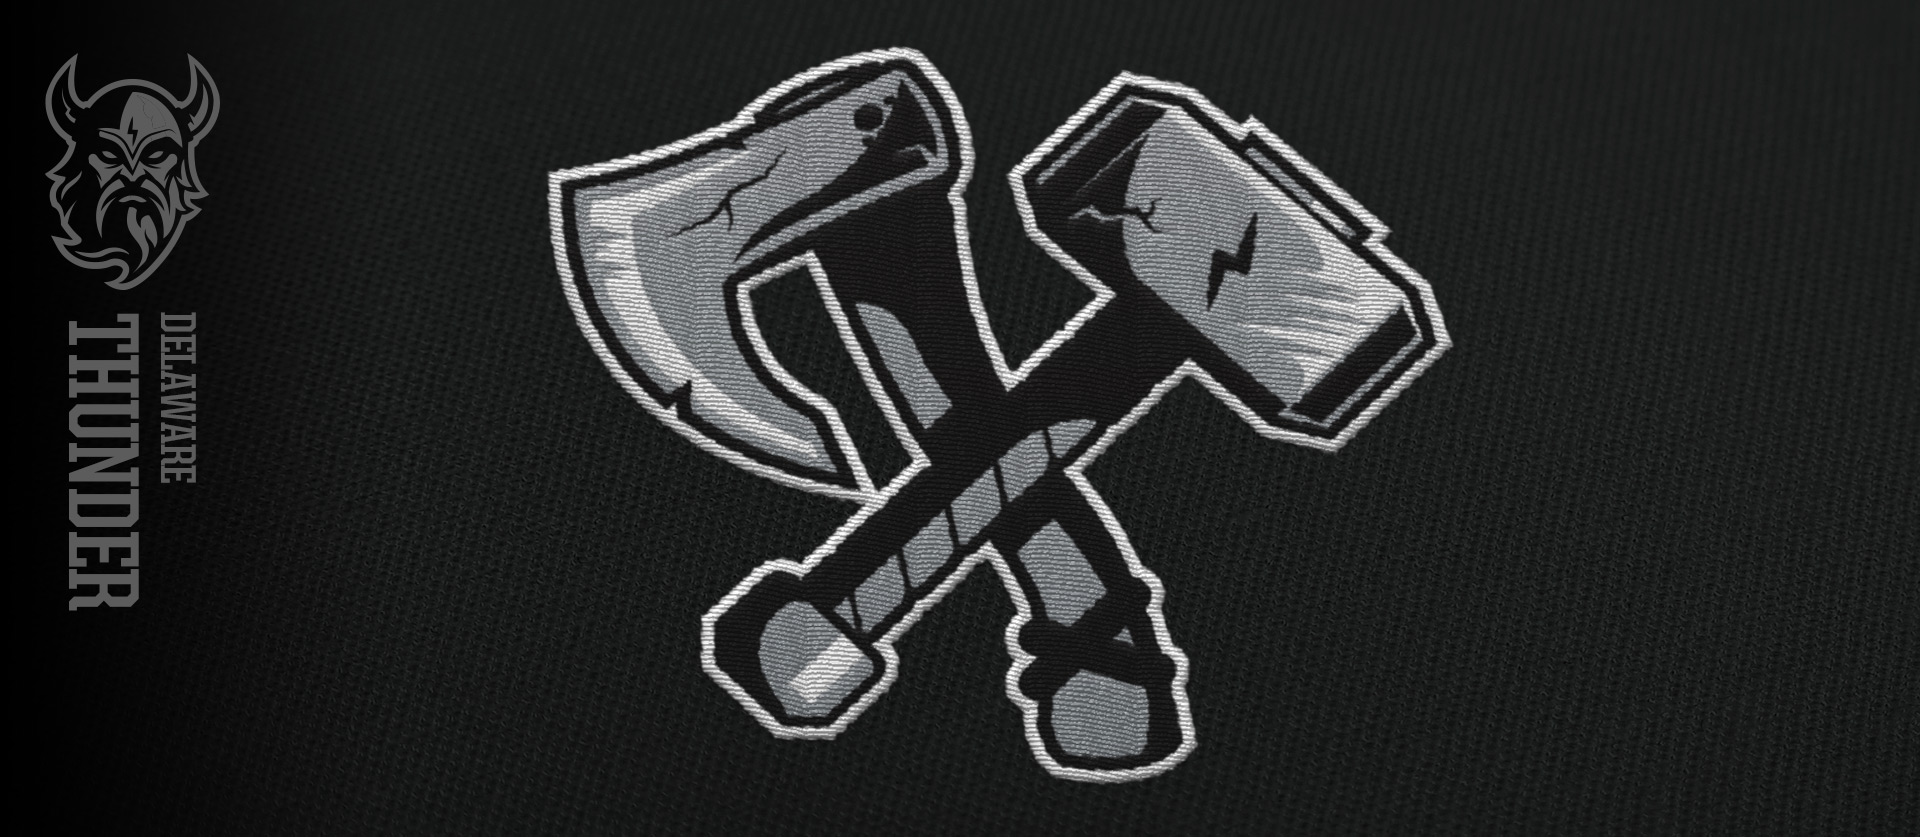 Delaware Thunder Uniforms Close-up Hammer Axe design